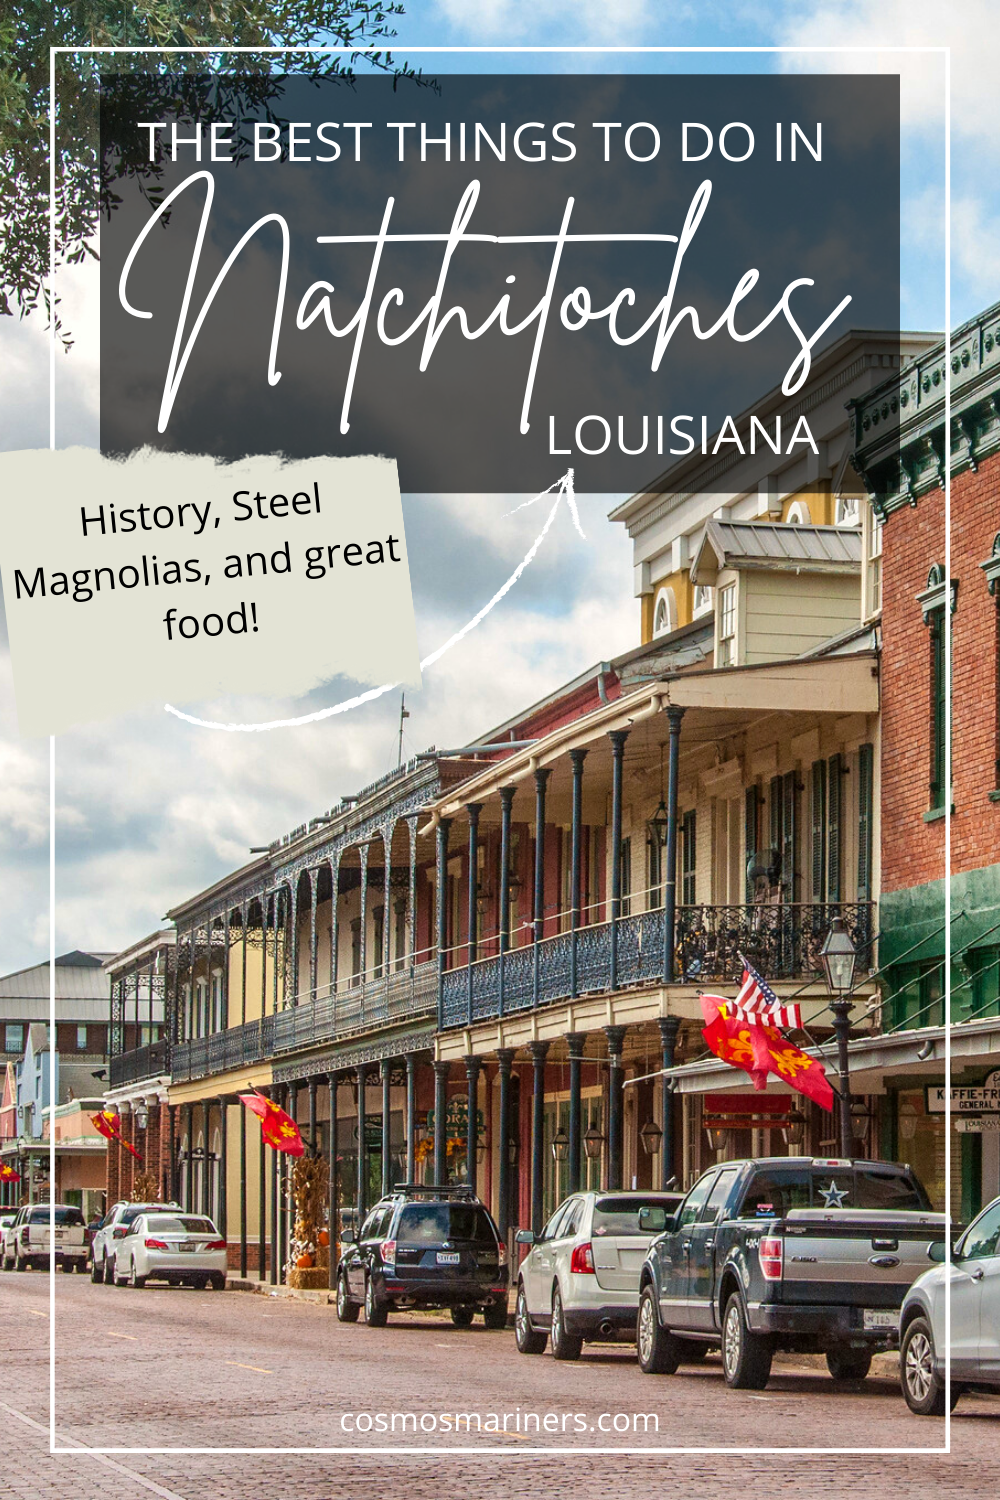 Teen DIY Bookmarks - City of Natchitoches, Louisiana